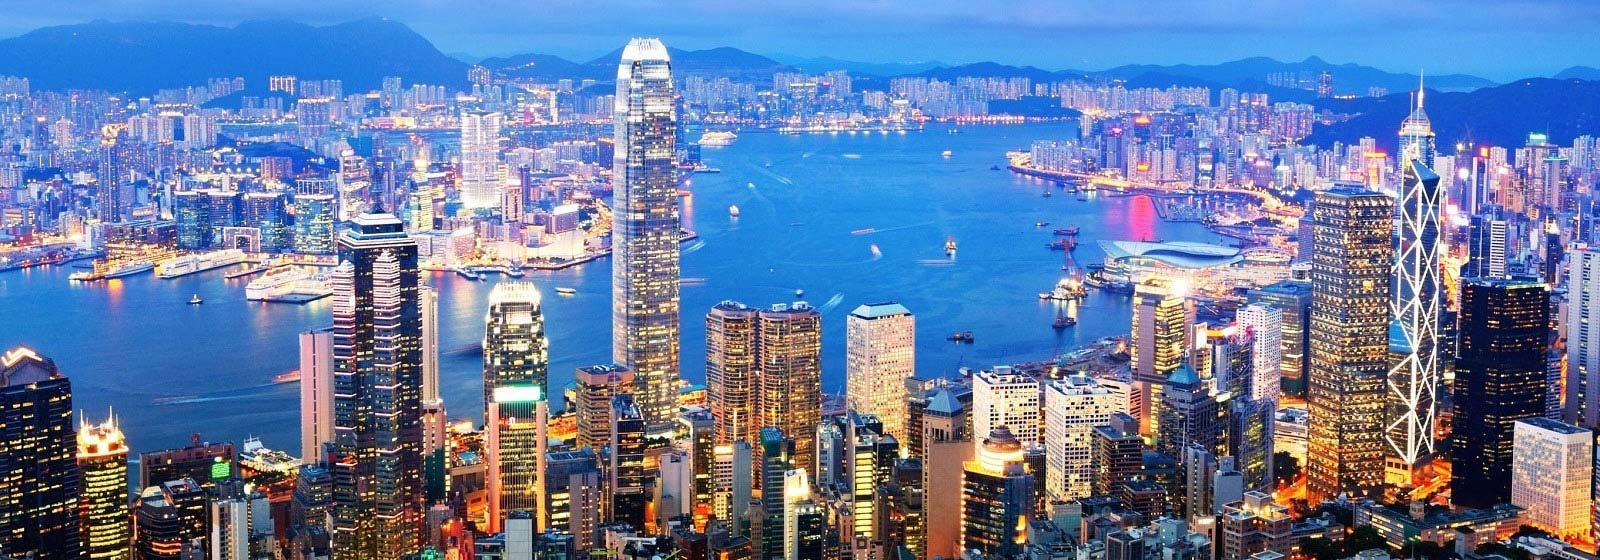 Holidays in Hong Kong & Macau free airport transfers